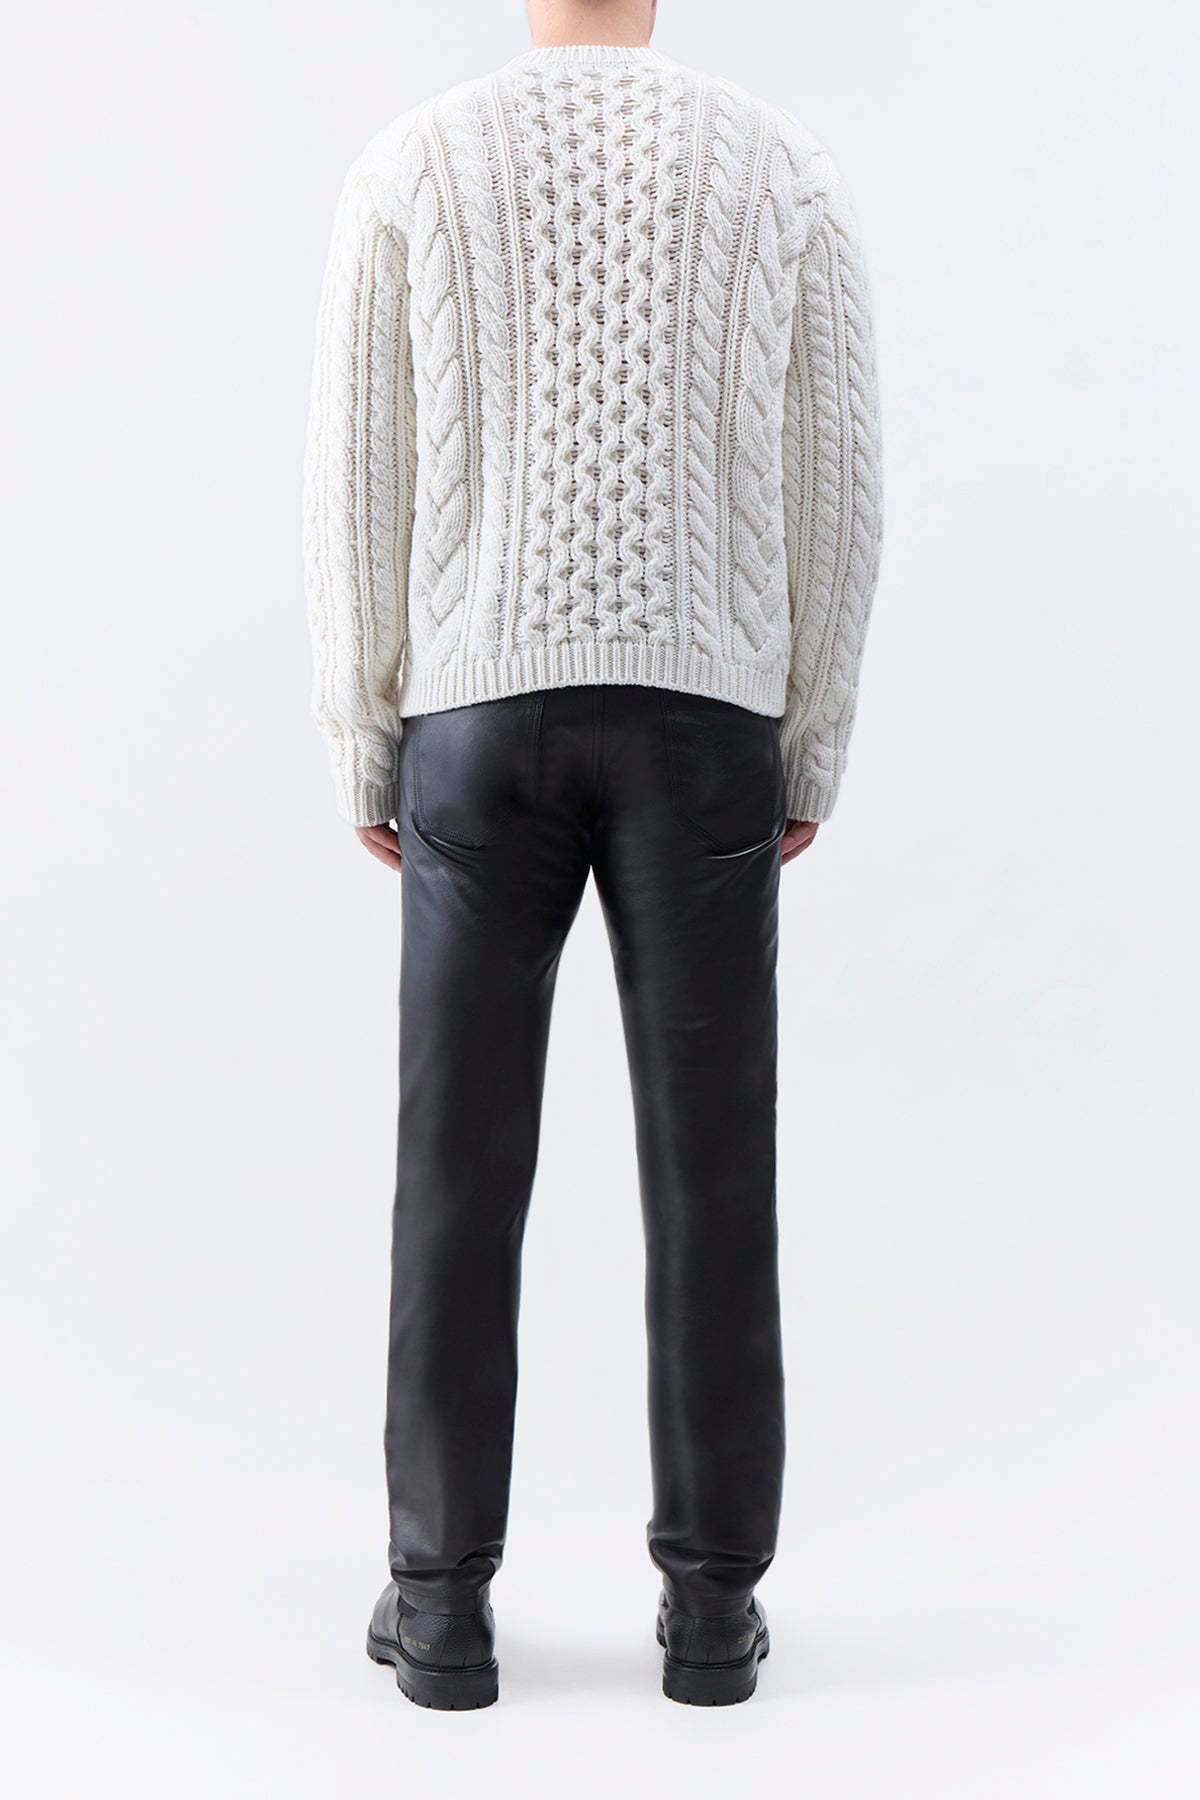 Geoffrey Knit Sweater in Ivory Cashmere